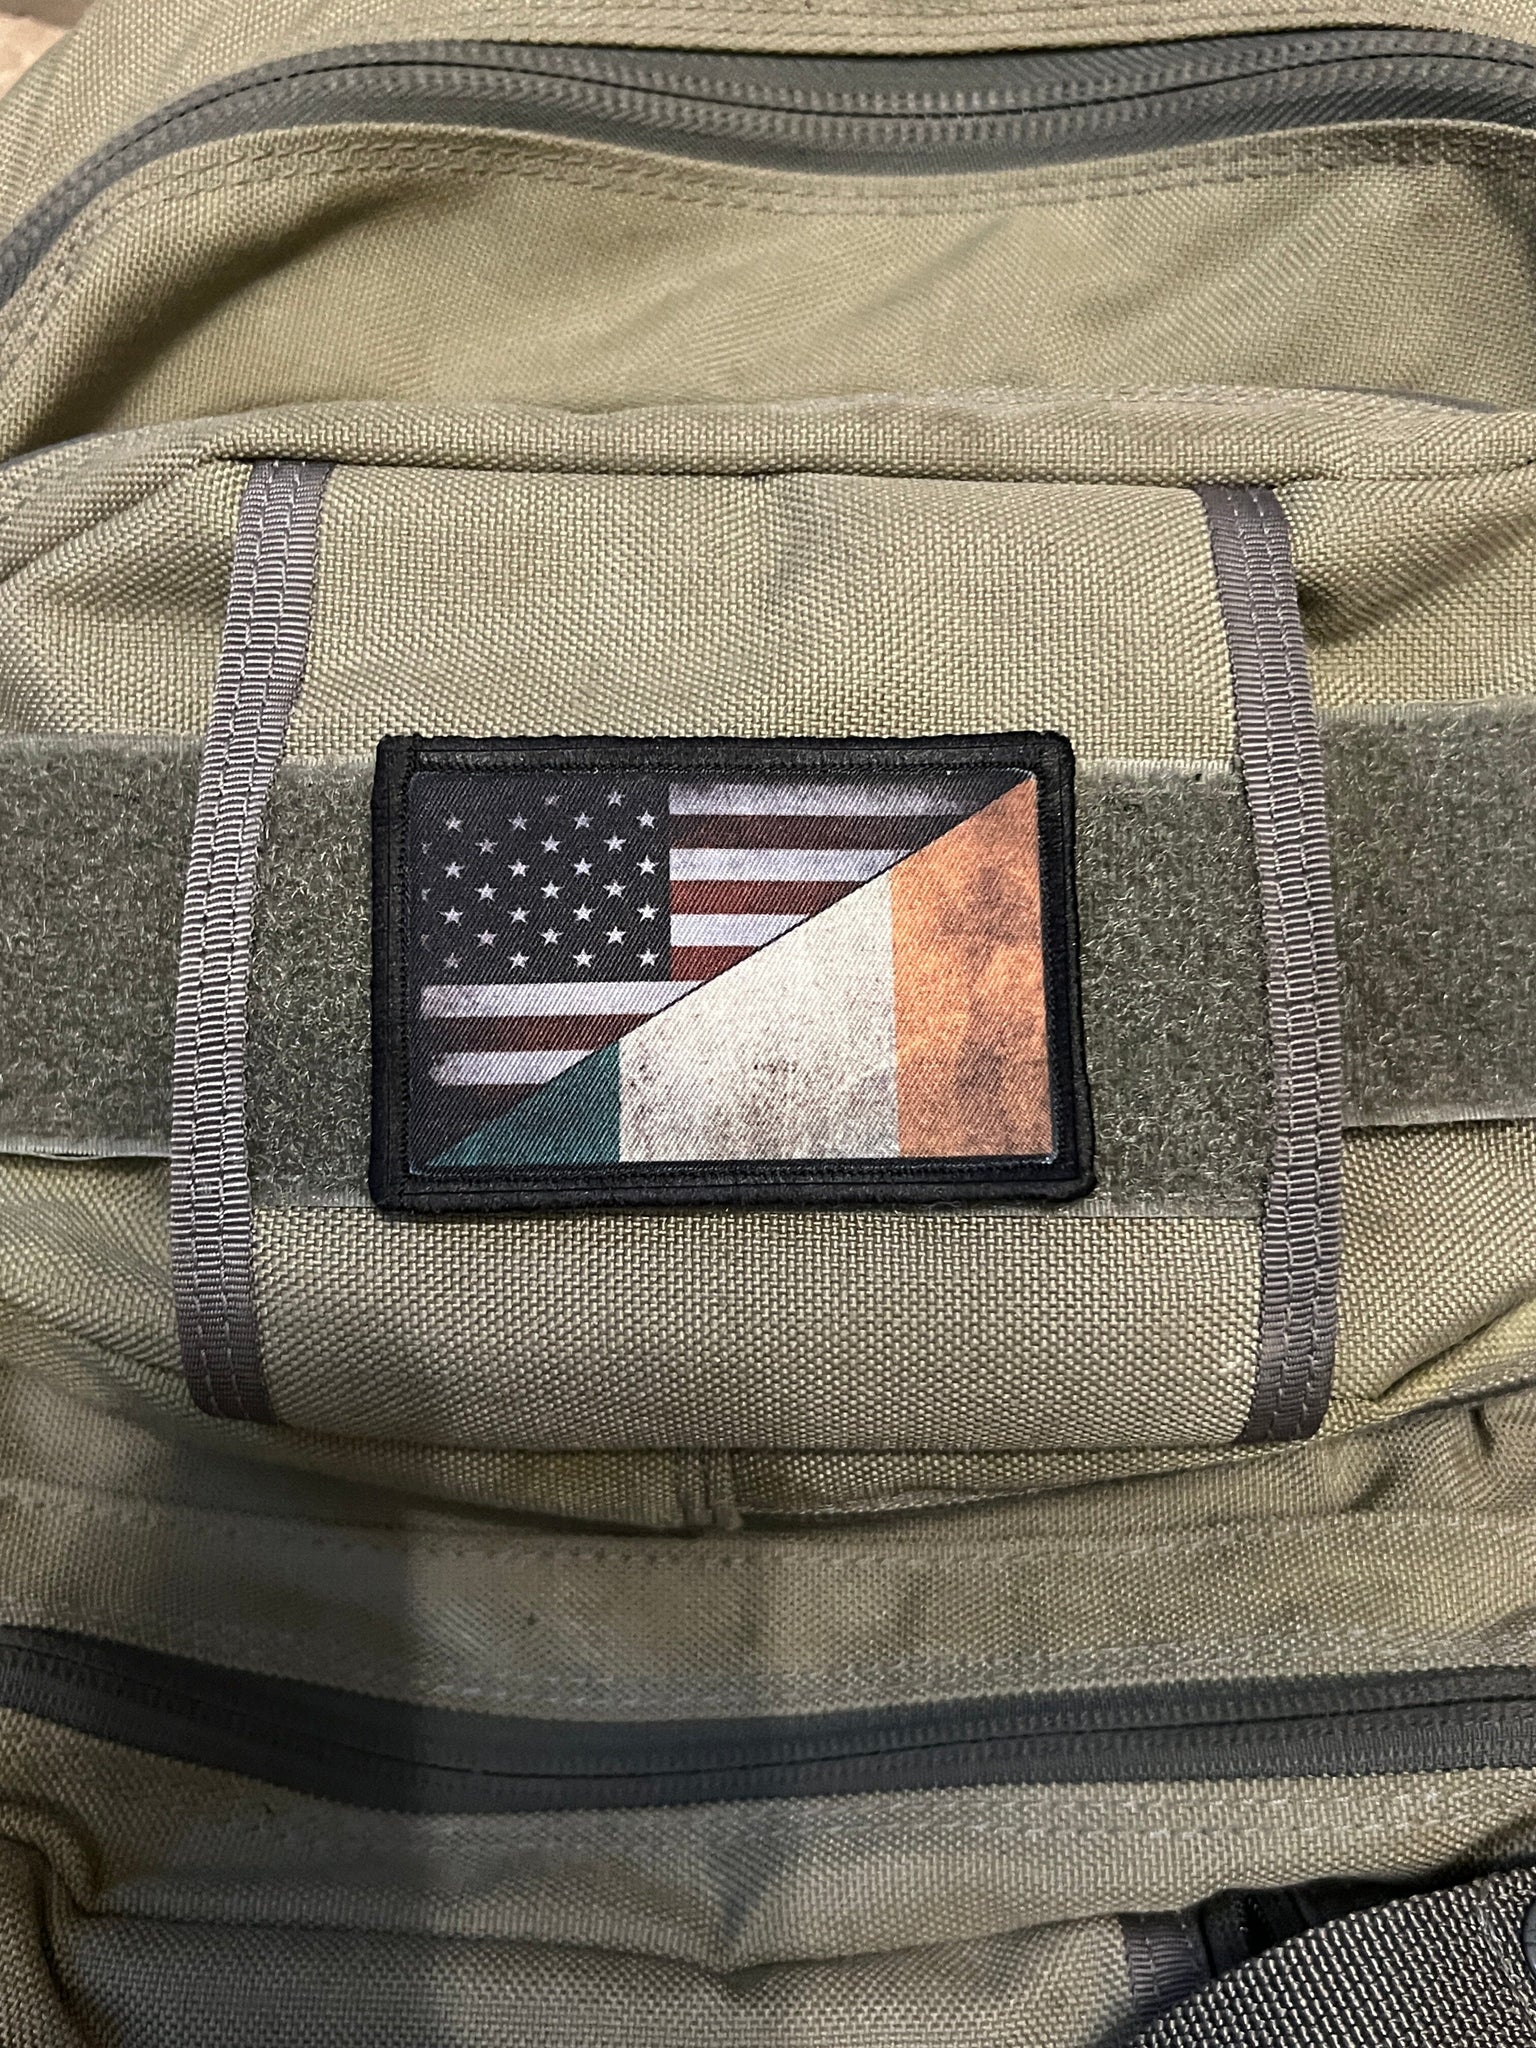 Irish Ireland USA Flag Velcro Morale patch tactical velcro patches velcro patches tactical morale patches velcro